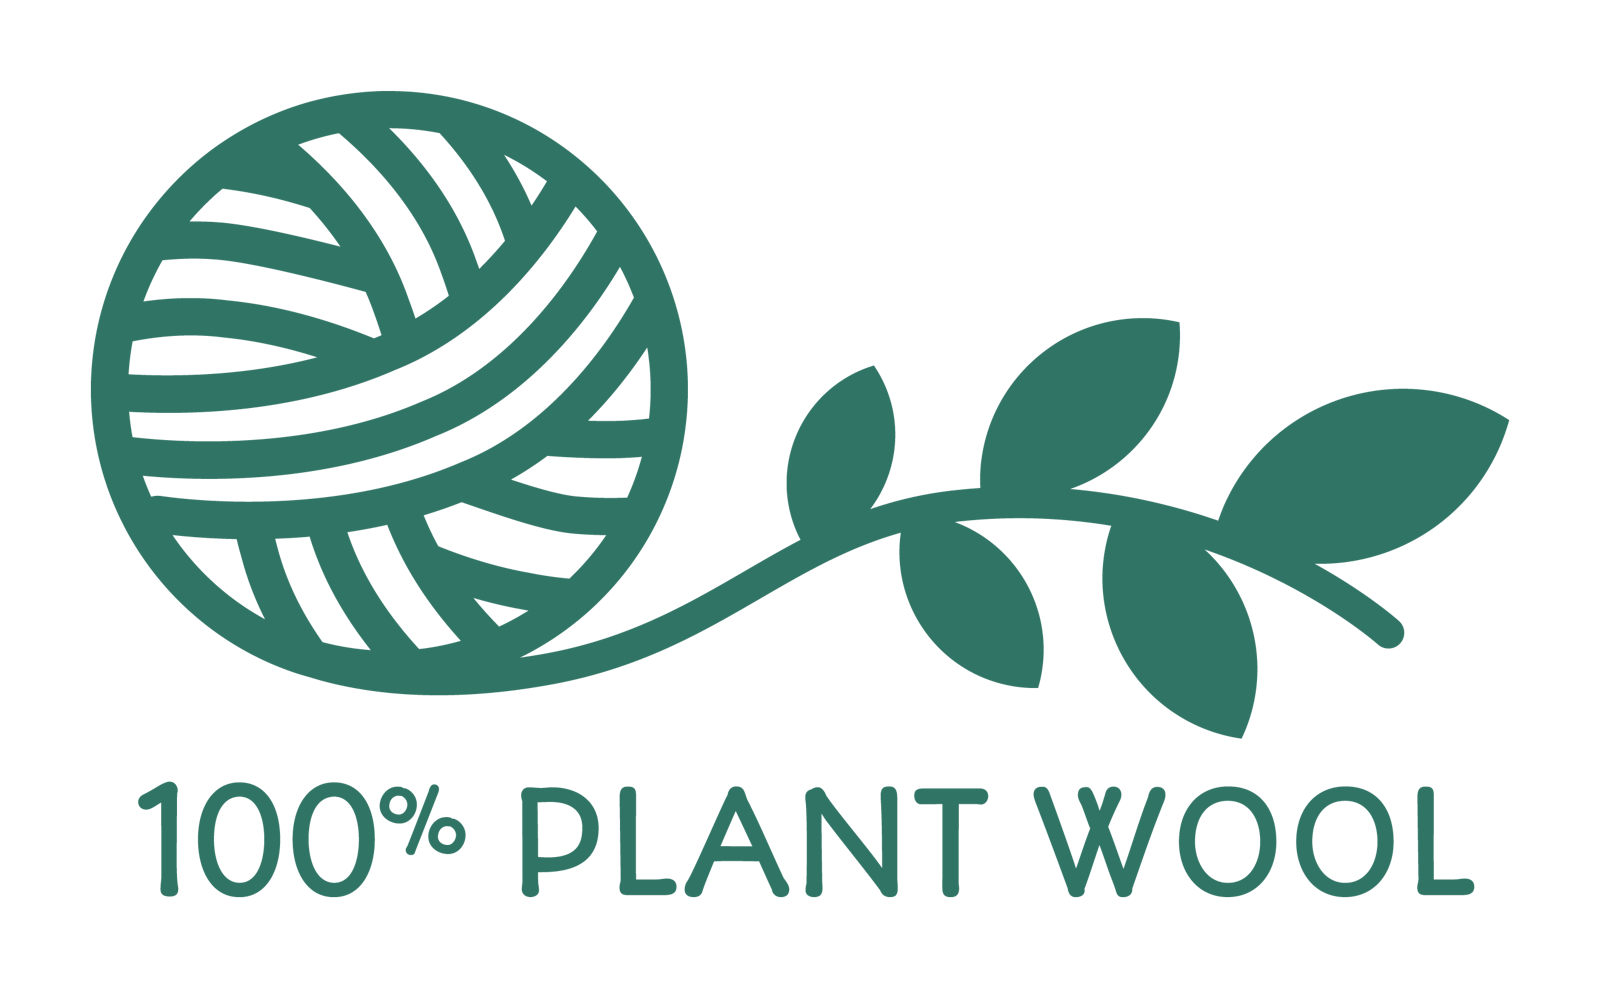 100% Plant Wool certification